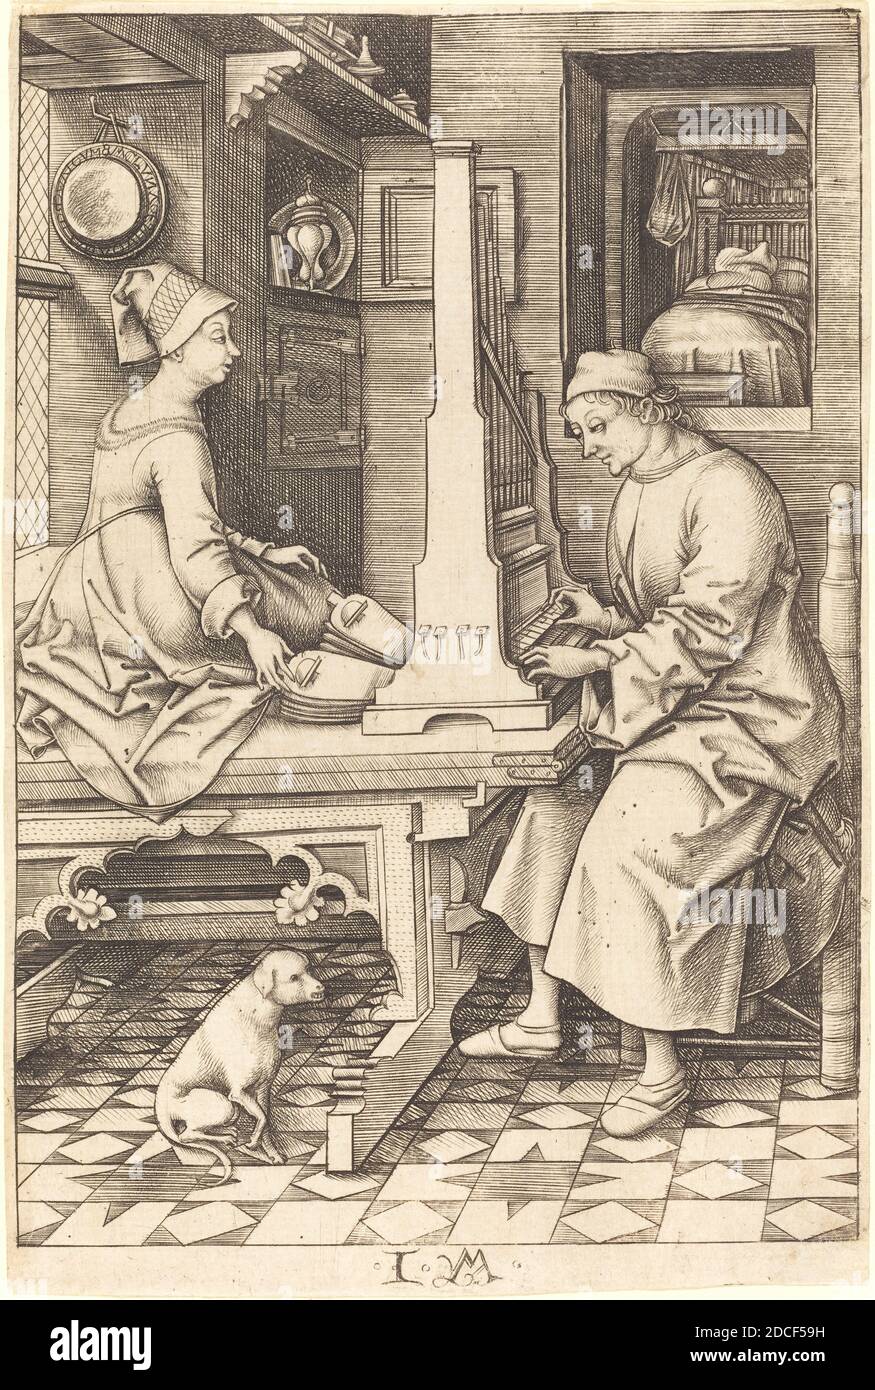 Israhel van Meckenem, (artist), German, c. 1445 - 1503, The Organ Player and His Wife, Scenes of Daily Life, (series), c. 1495/1503, engraving Stock Photo